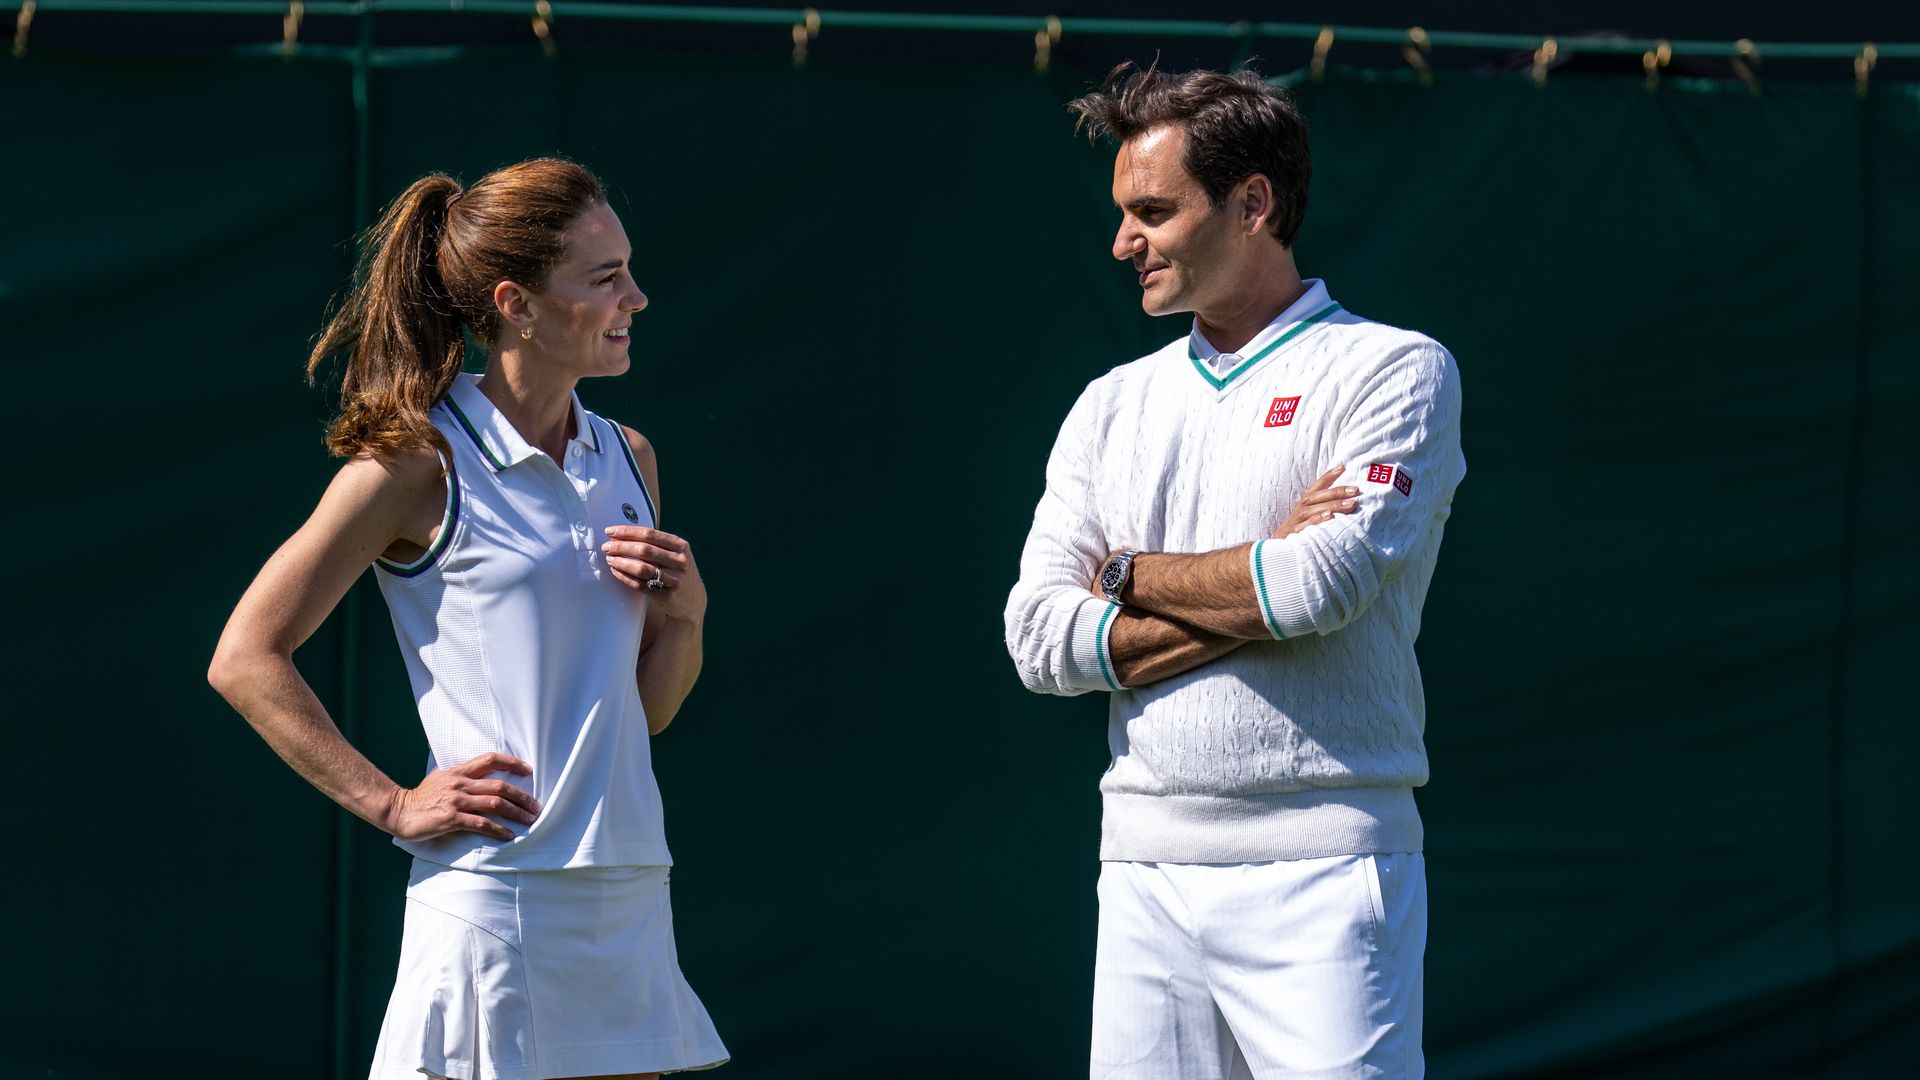 Princess Kate and Roger Federer at wimbledon